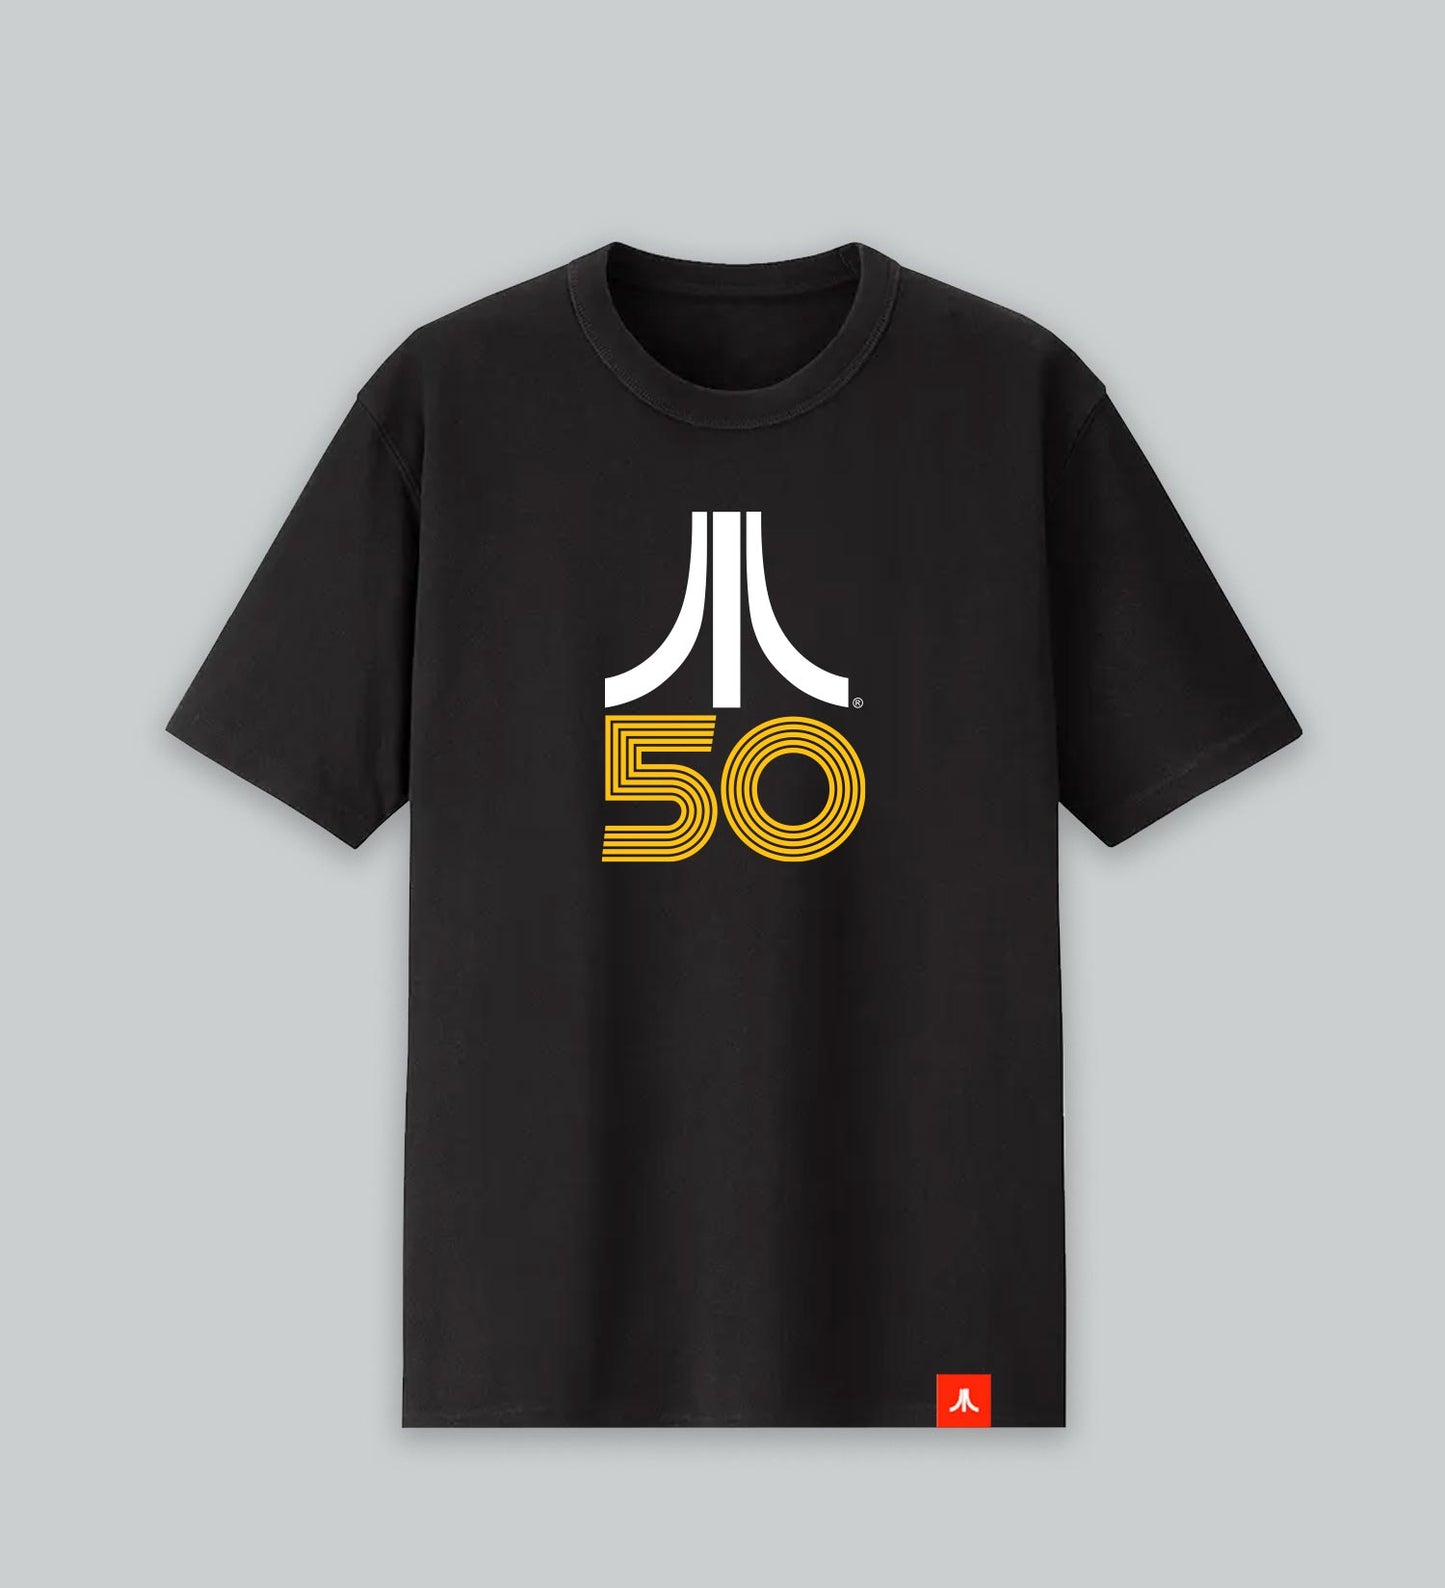 Atari 50th Anniversary Sunnyvale Logo Tee Vertical